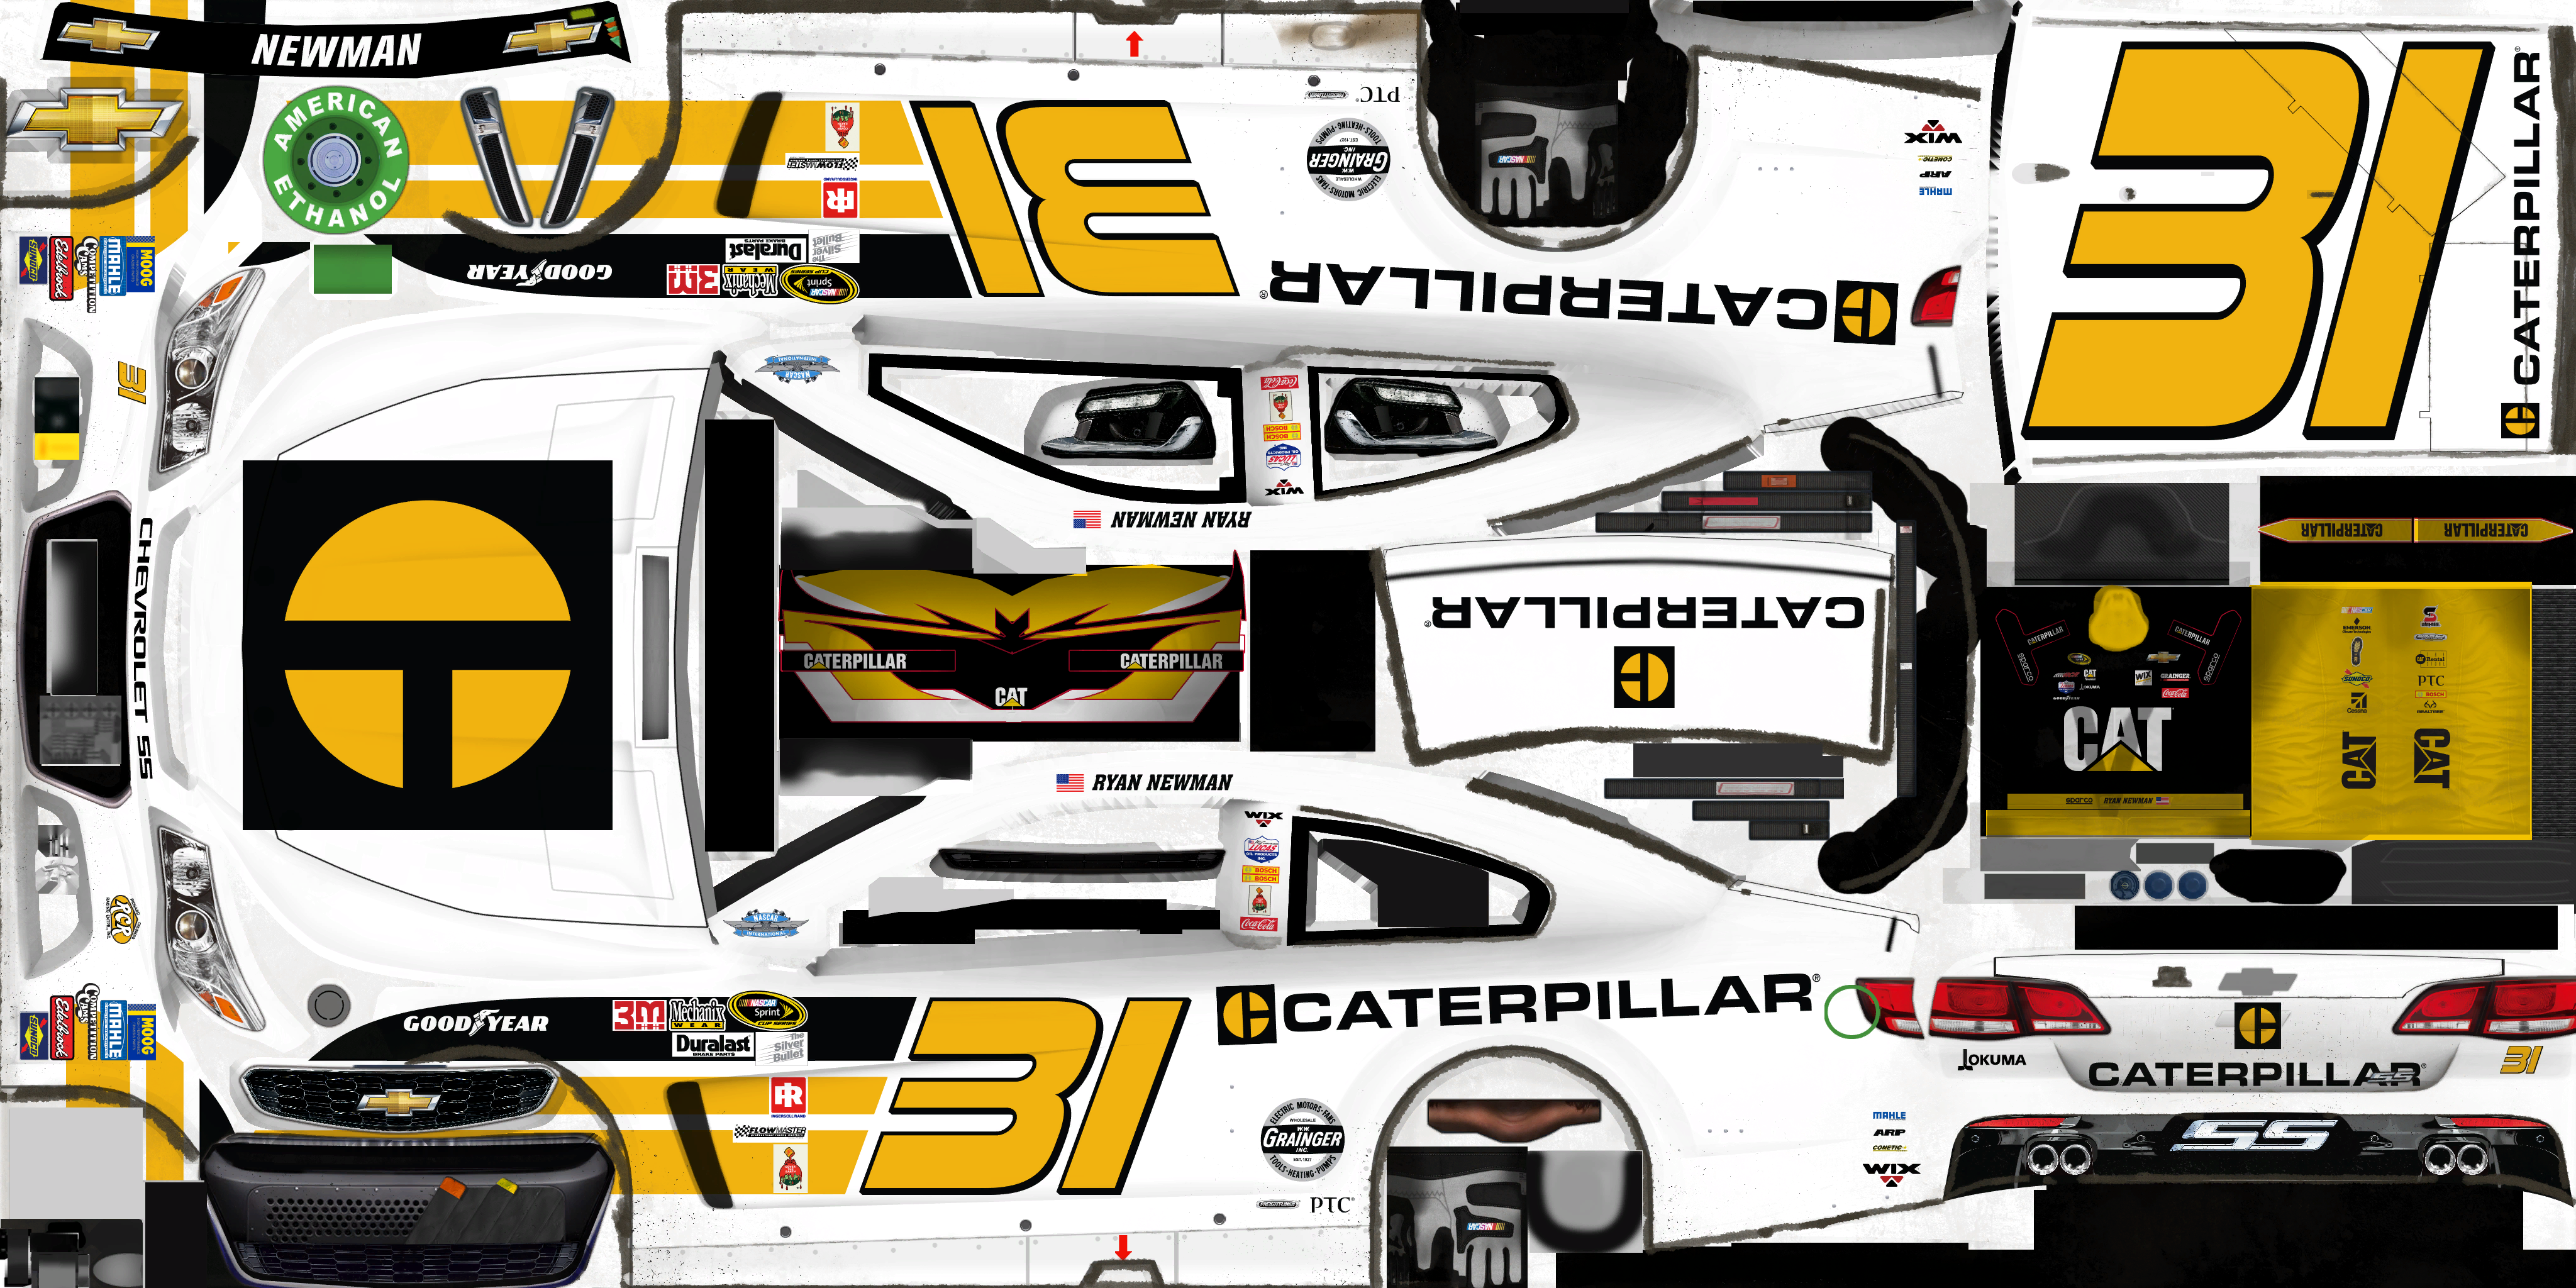 NASCAR Heat Evolution - #31 Ryan Newman (Caterpillar Throwback)